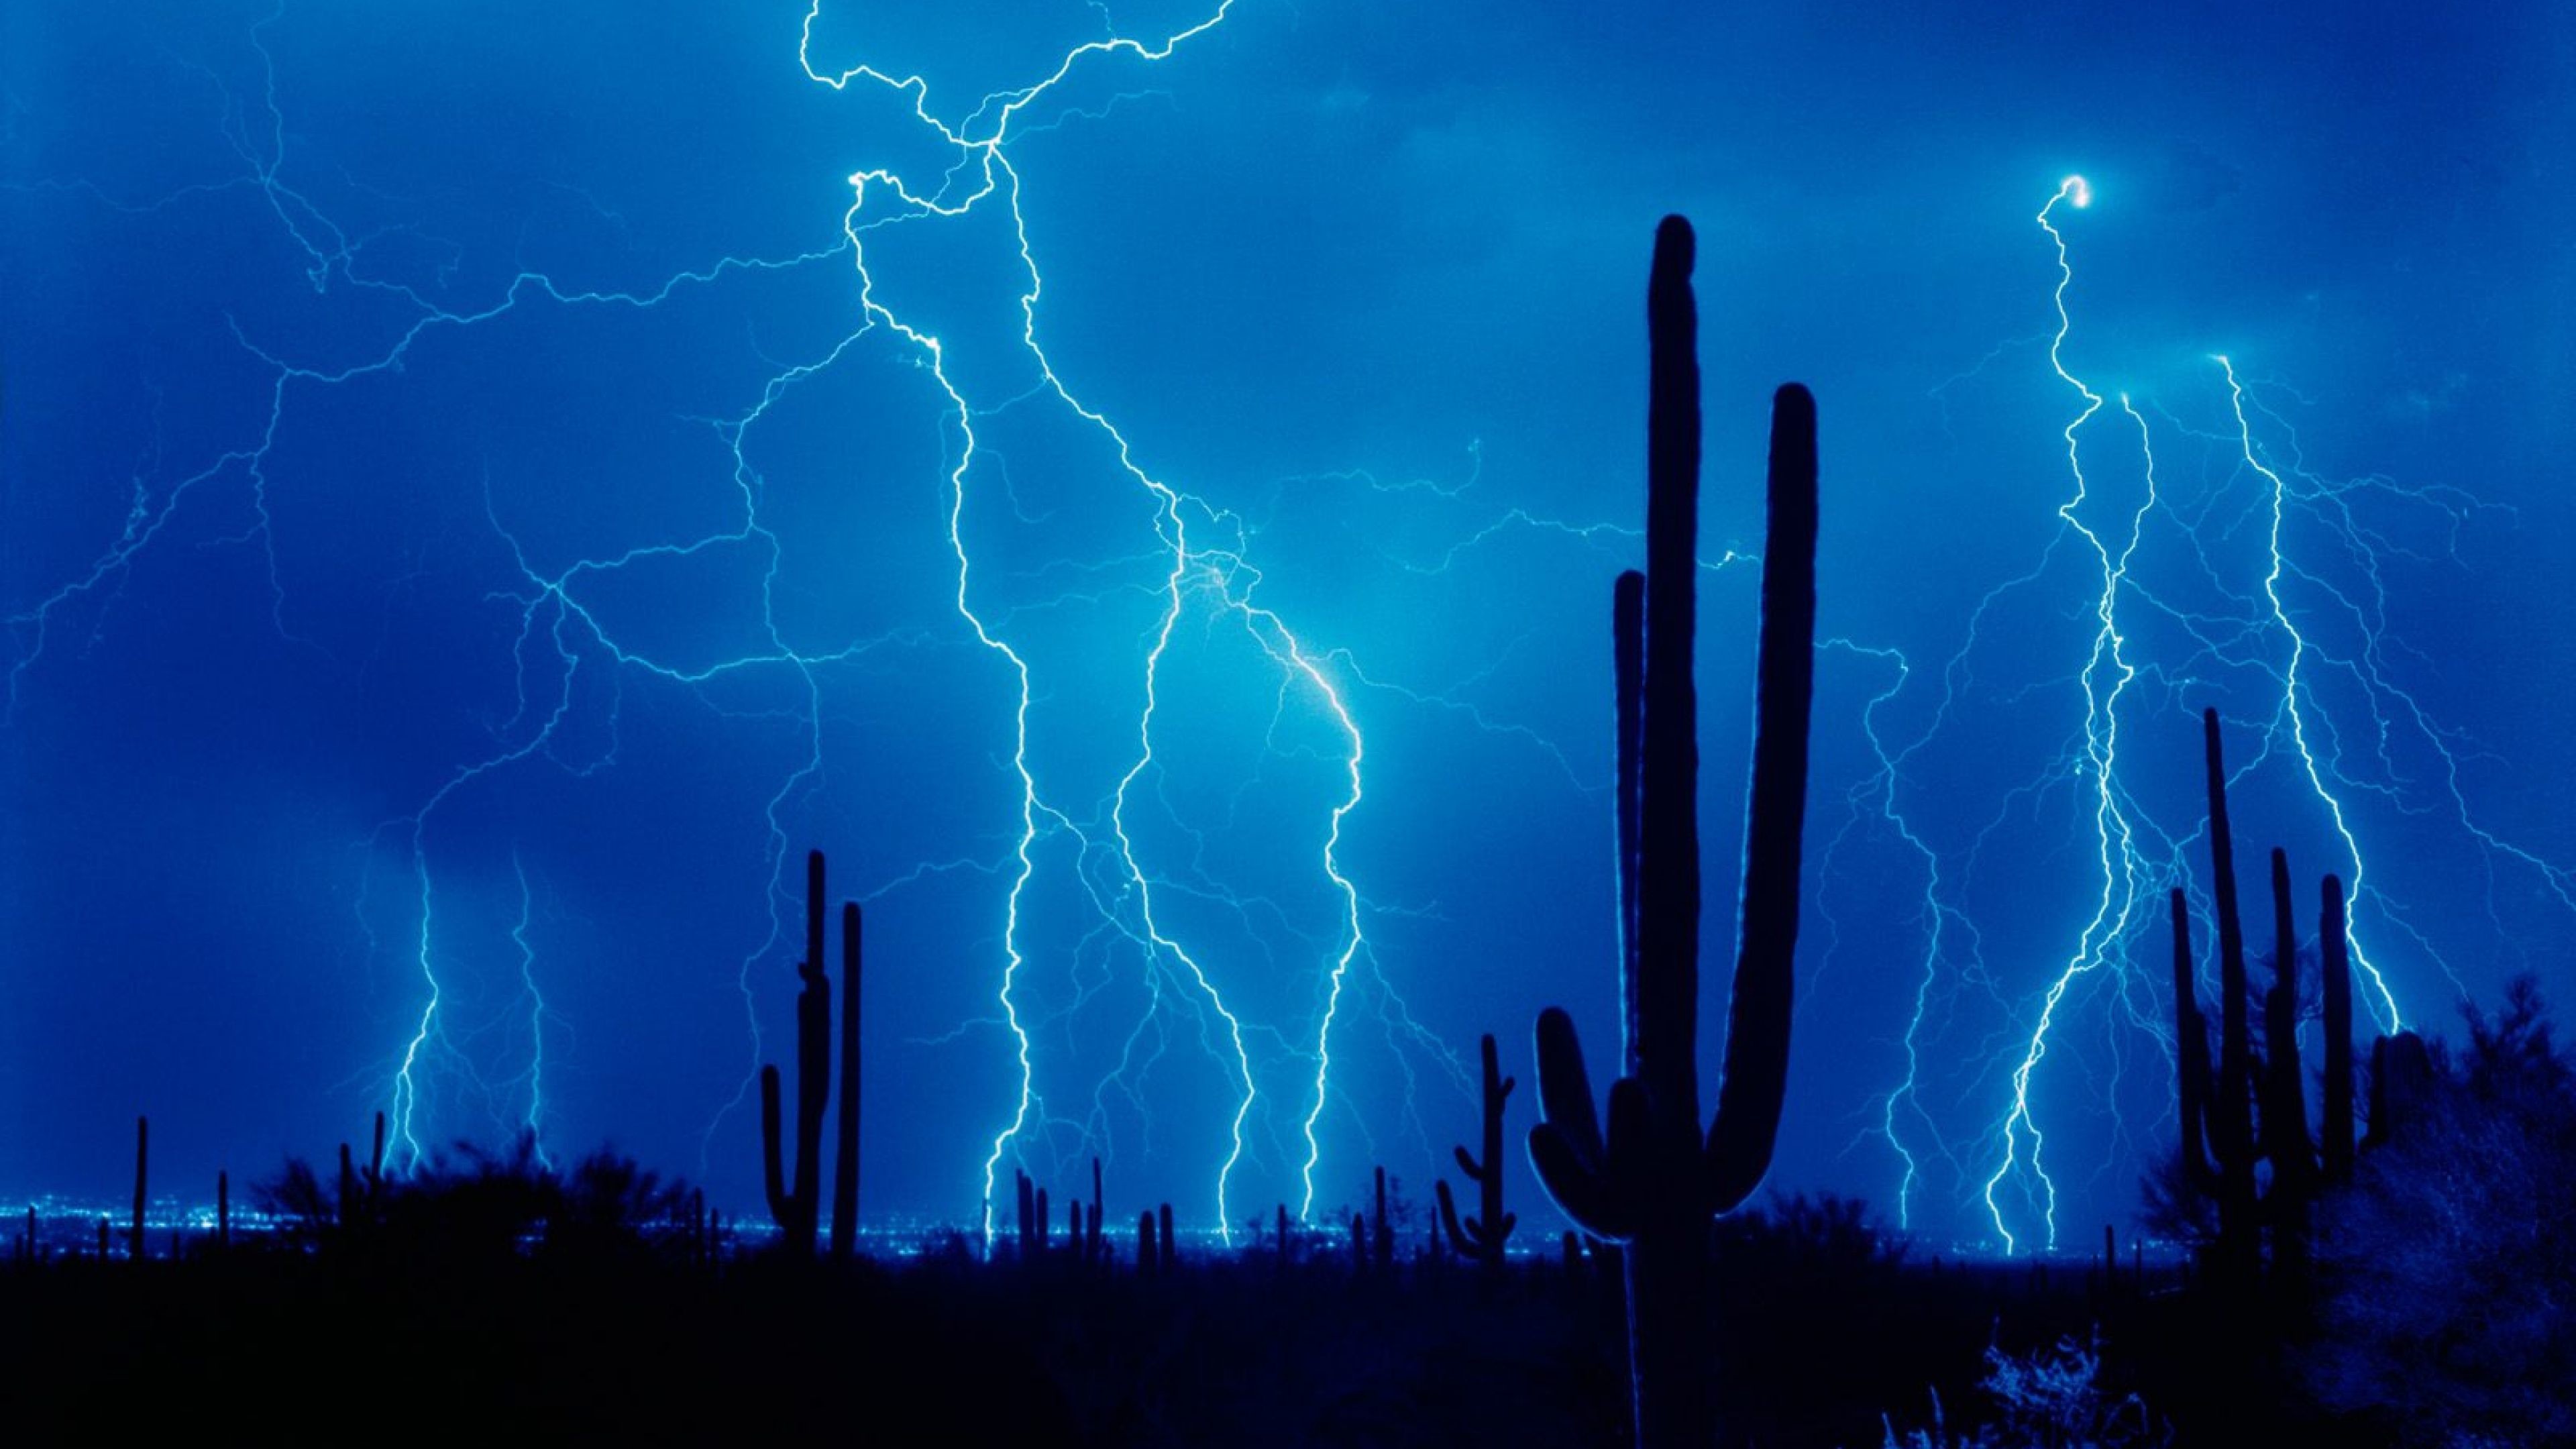 3840x2160 Download Wallpaper  Lightning, Thunder-storm, Elements .